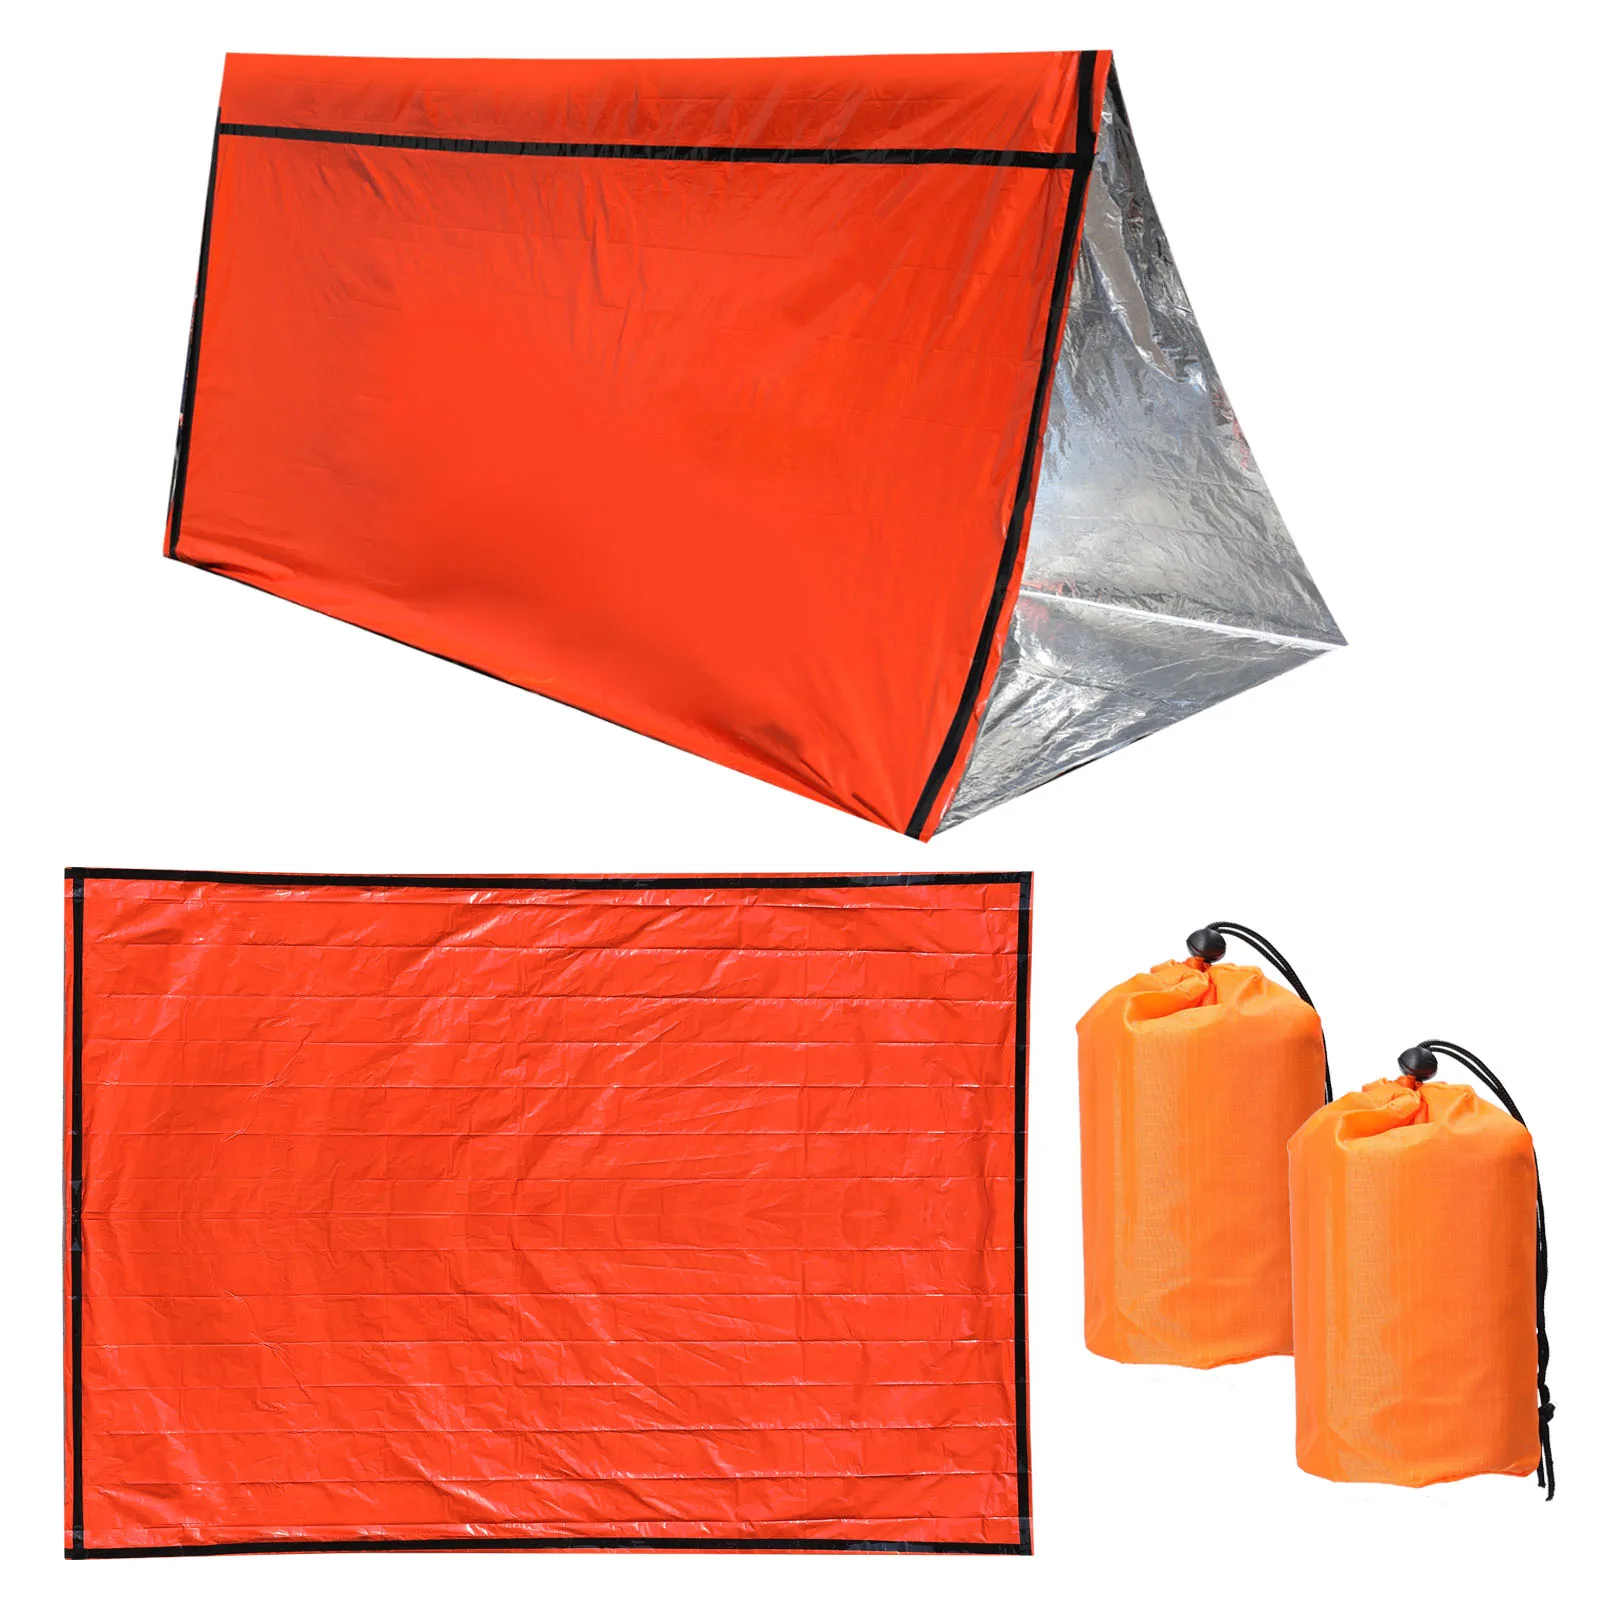 BETIMESYU Emergency Sleeping Bags Camouflage Survival Bivy Sack with Portable Drawstring Bag for Camping,Adventure Hiking 78 x 47in Emergency Blanket Survivor Sleeping Bag 